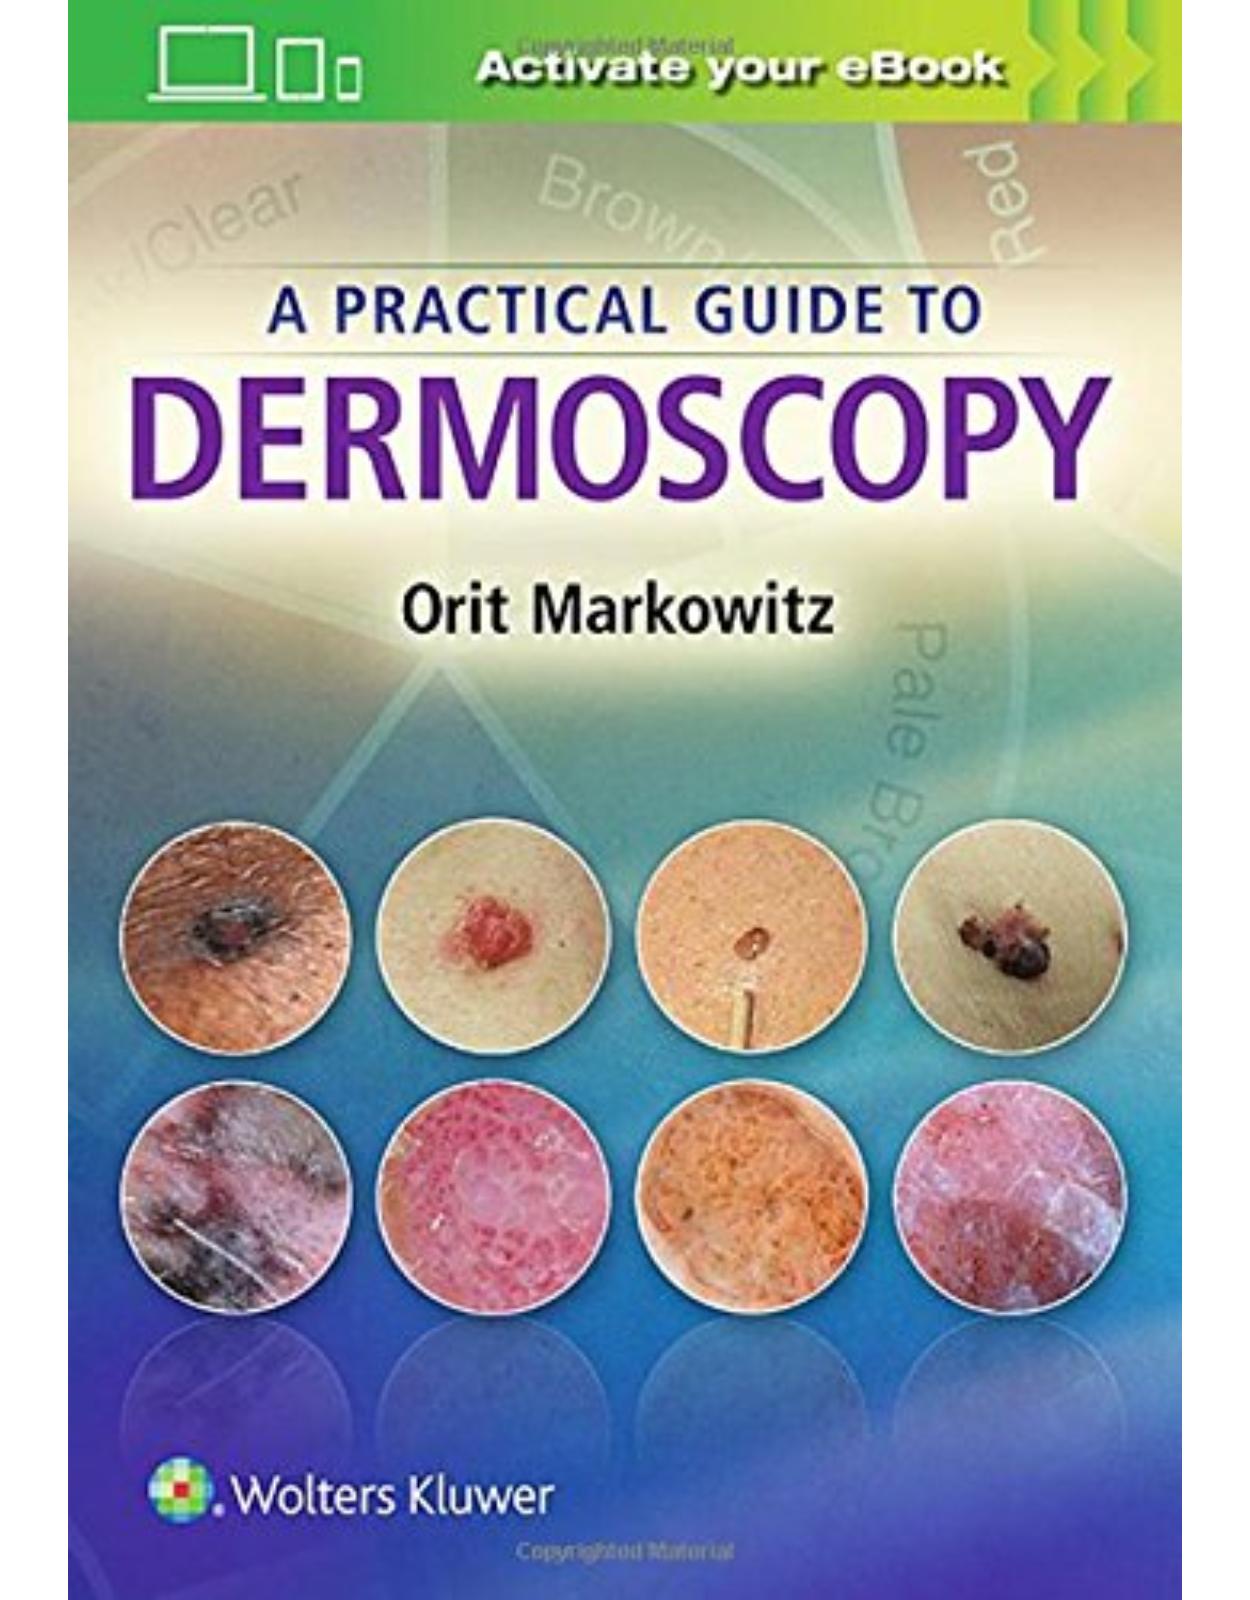 A Practical Guide to Dermoscopy